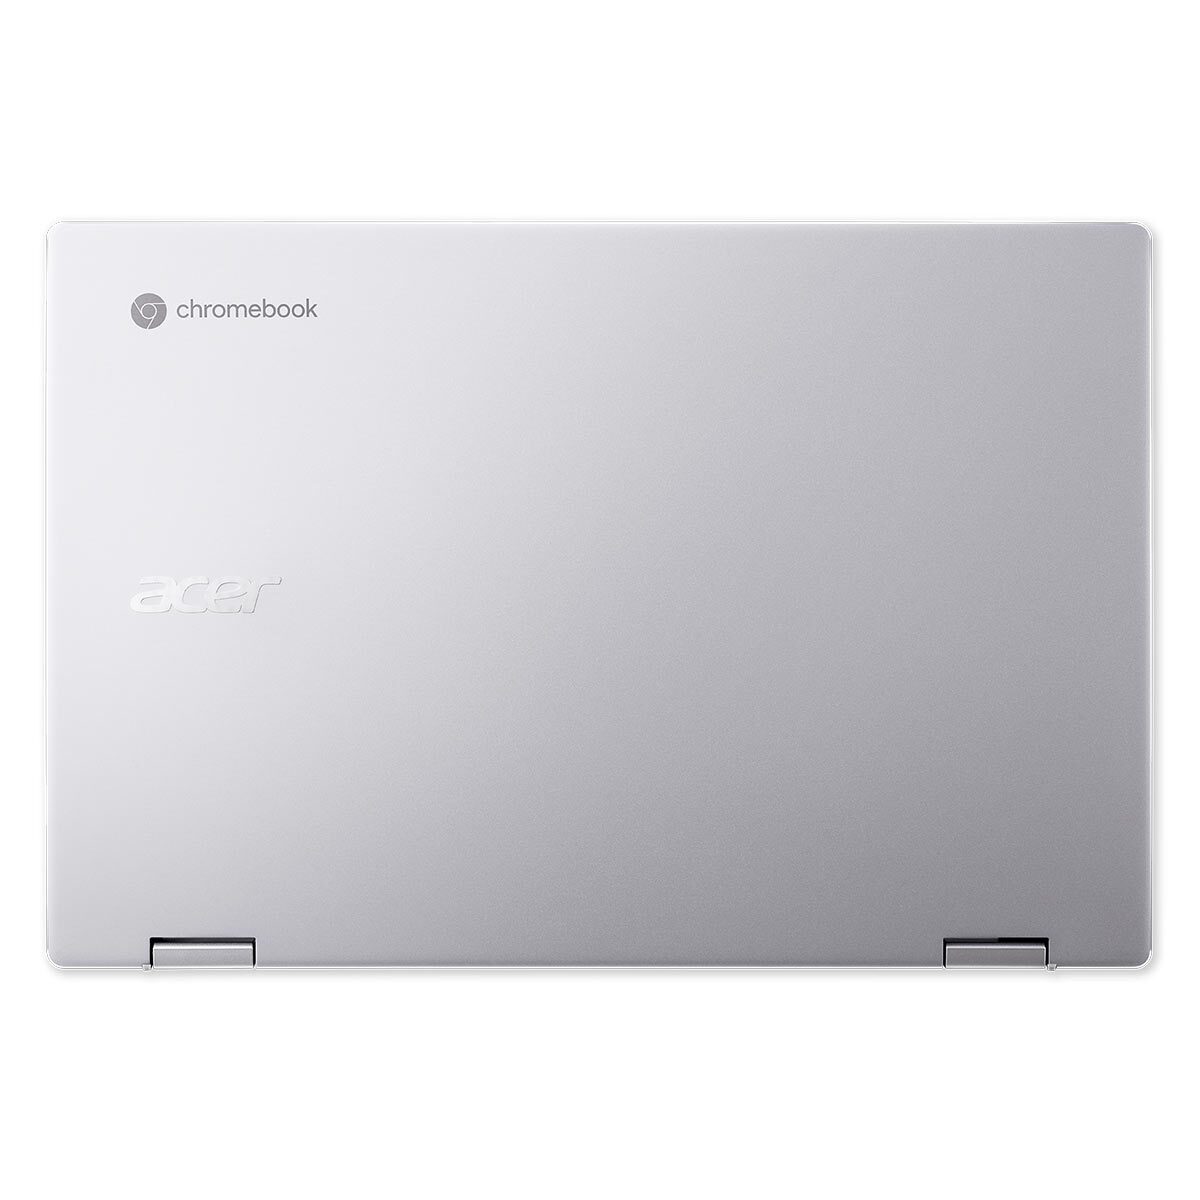 Acer 513, Qualcomm Snapdragon SC7180, 4GB RAM, 64GB eMMC, 13.3 Inch Convertible 2 in 1 Chromebook, NX.AS4EK.002